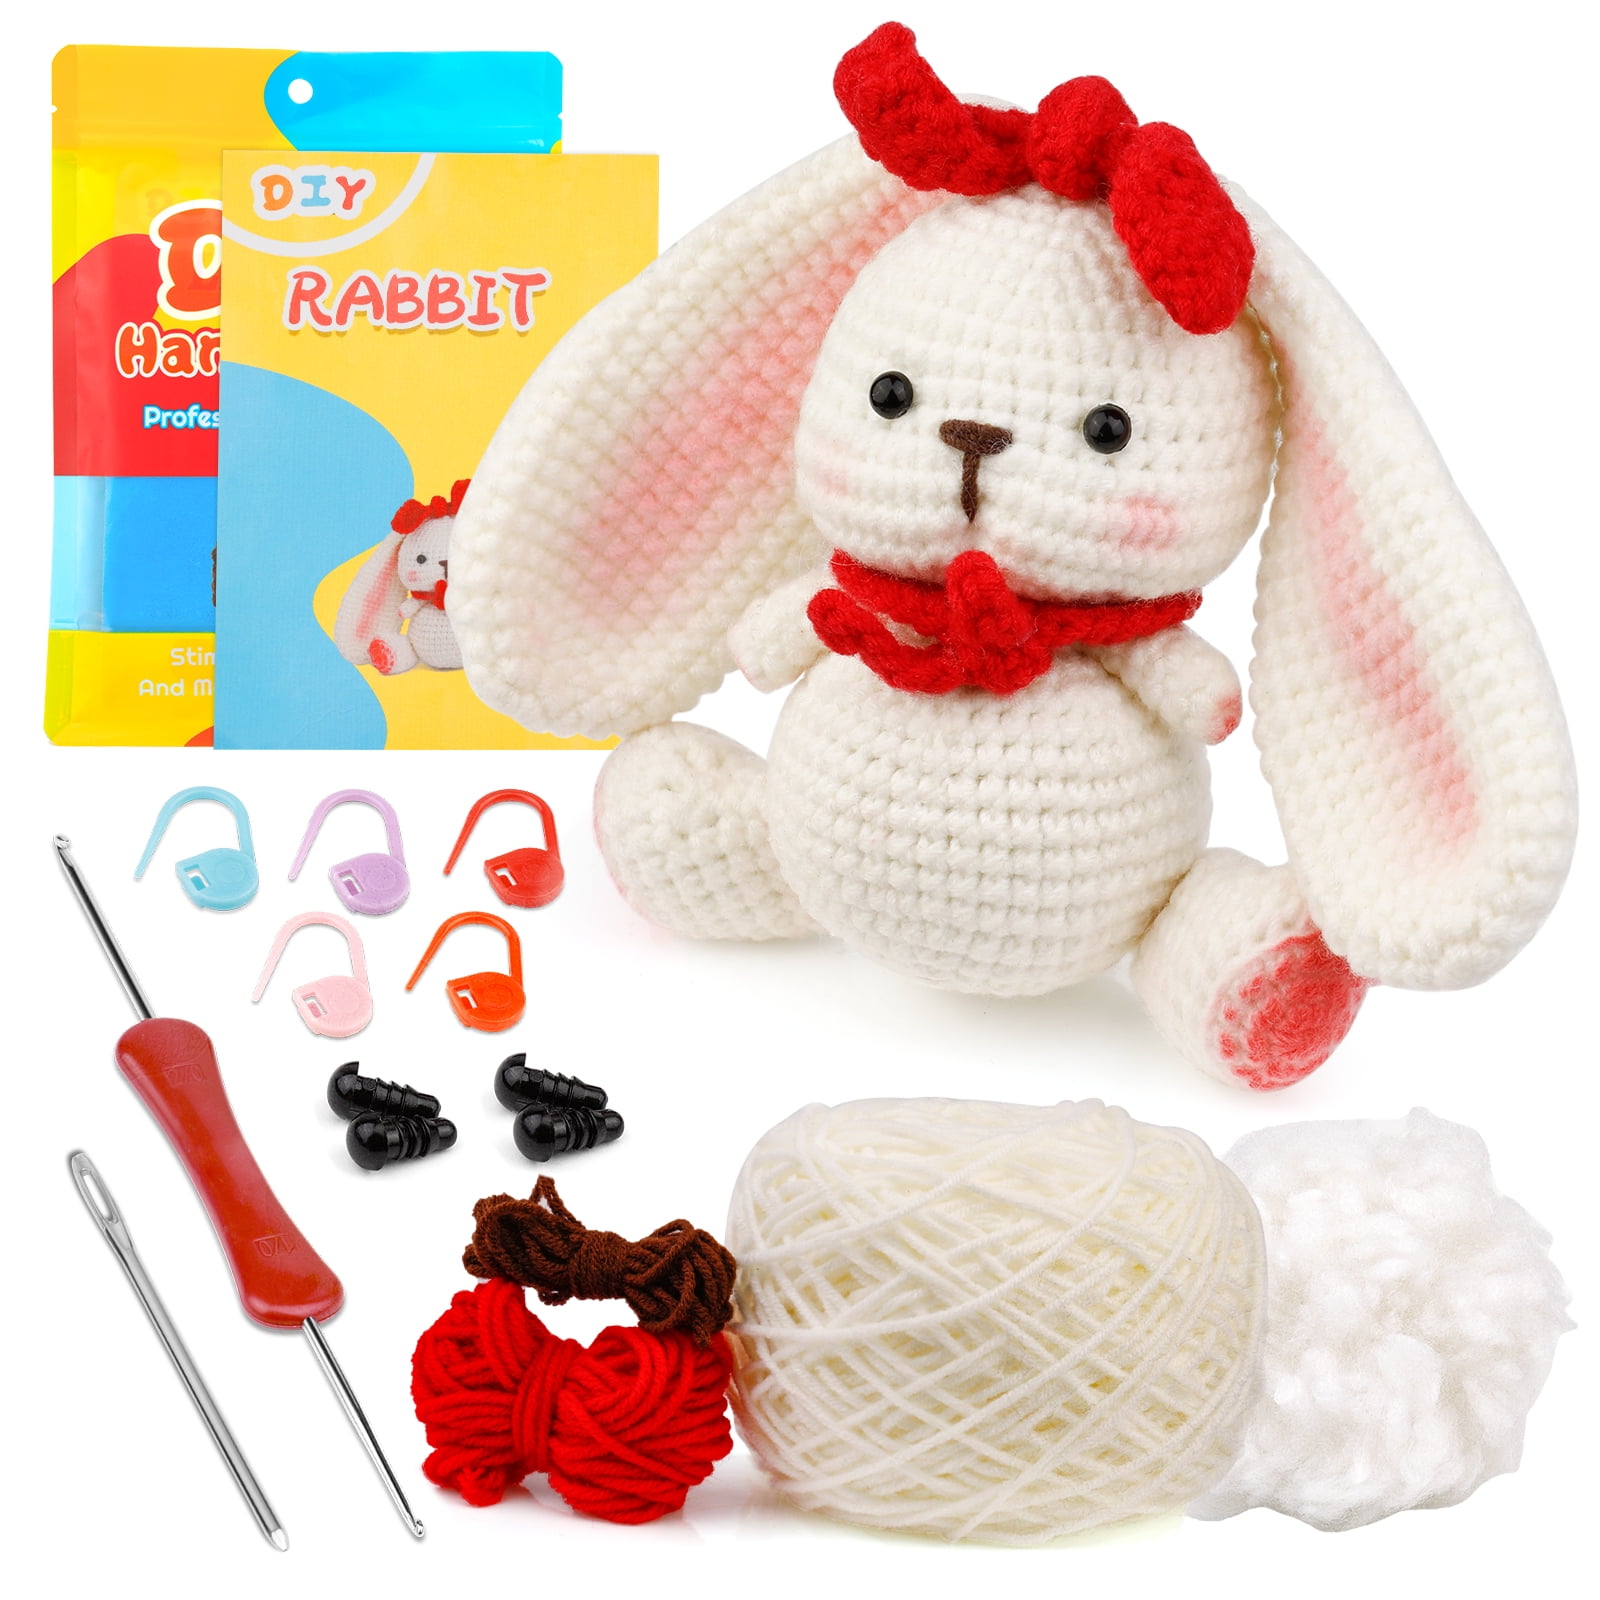 Noouwar 2pcs Crochet Kit for Beginners with Step-by-Step Video Tutorials - Beginner Crochet Kit for Adults Kids - Amigurumi Crochet Animal Kit DIY